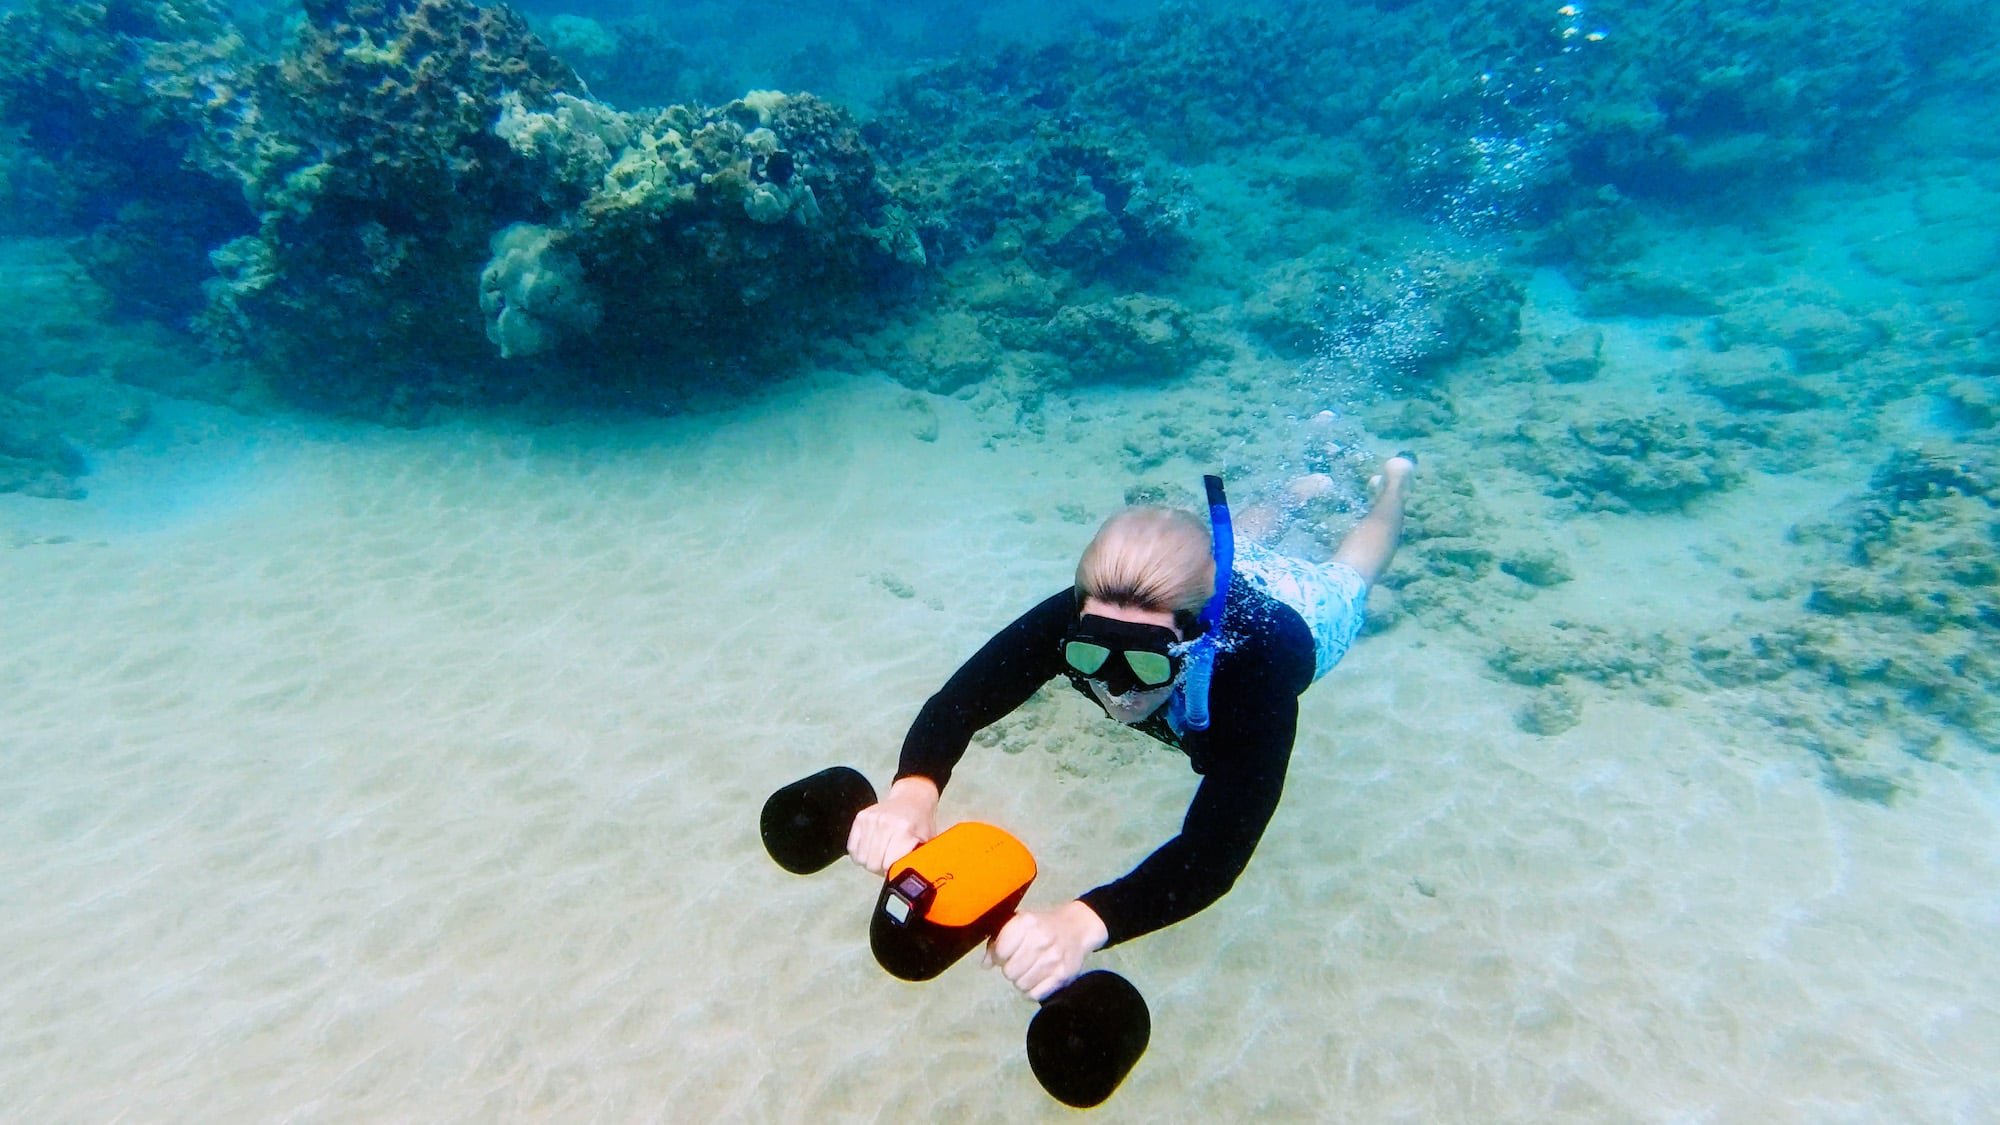 Geneinno S2 portable sea scooter lets you explore even deeper underwater